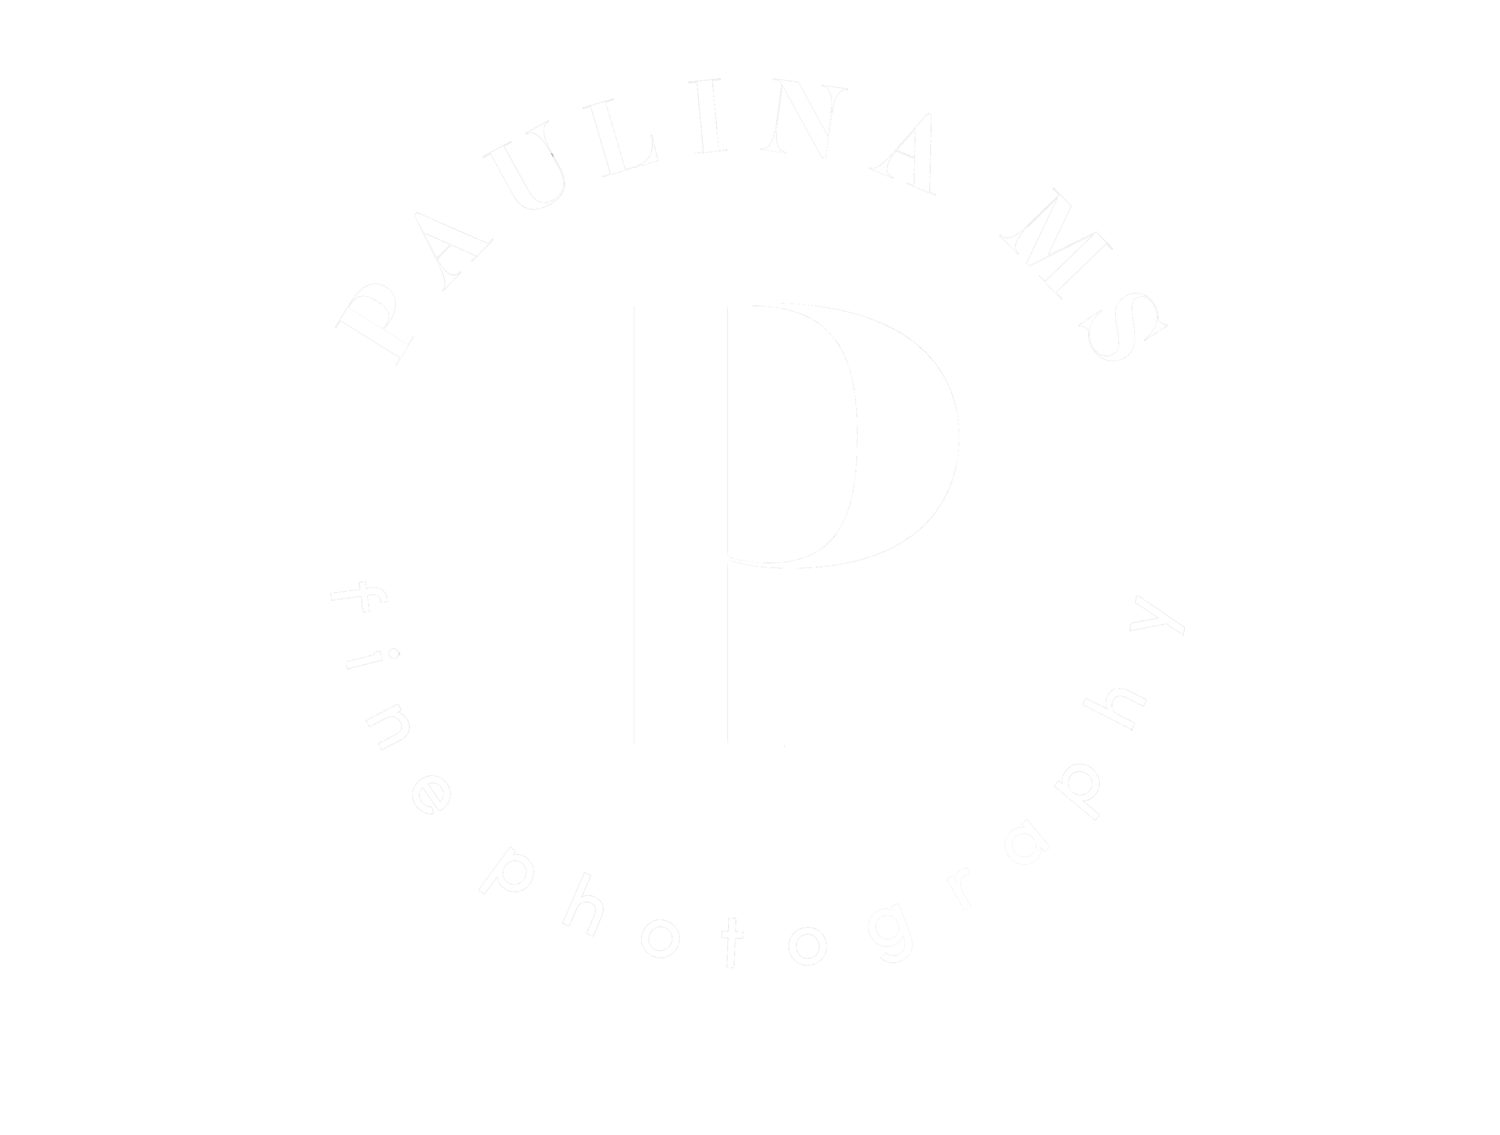 PAULINA MS PHOTO